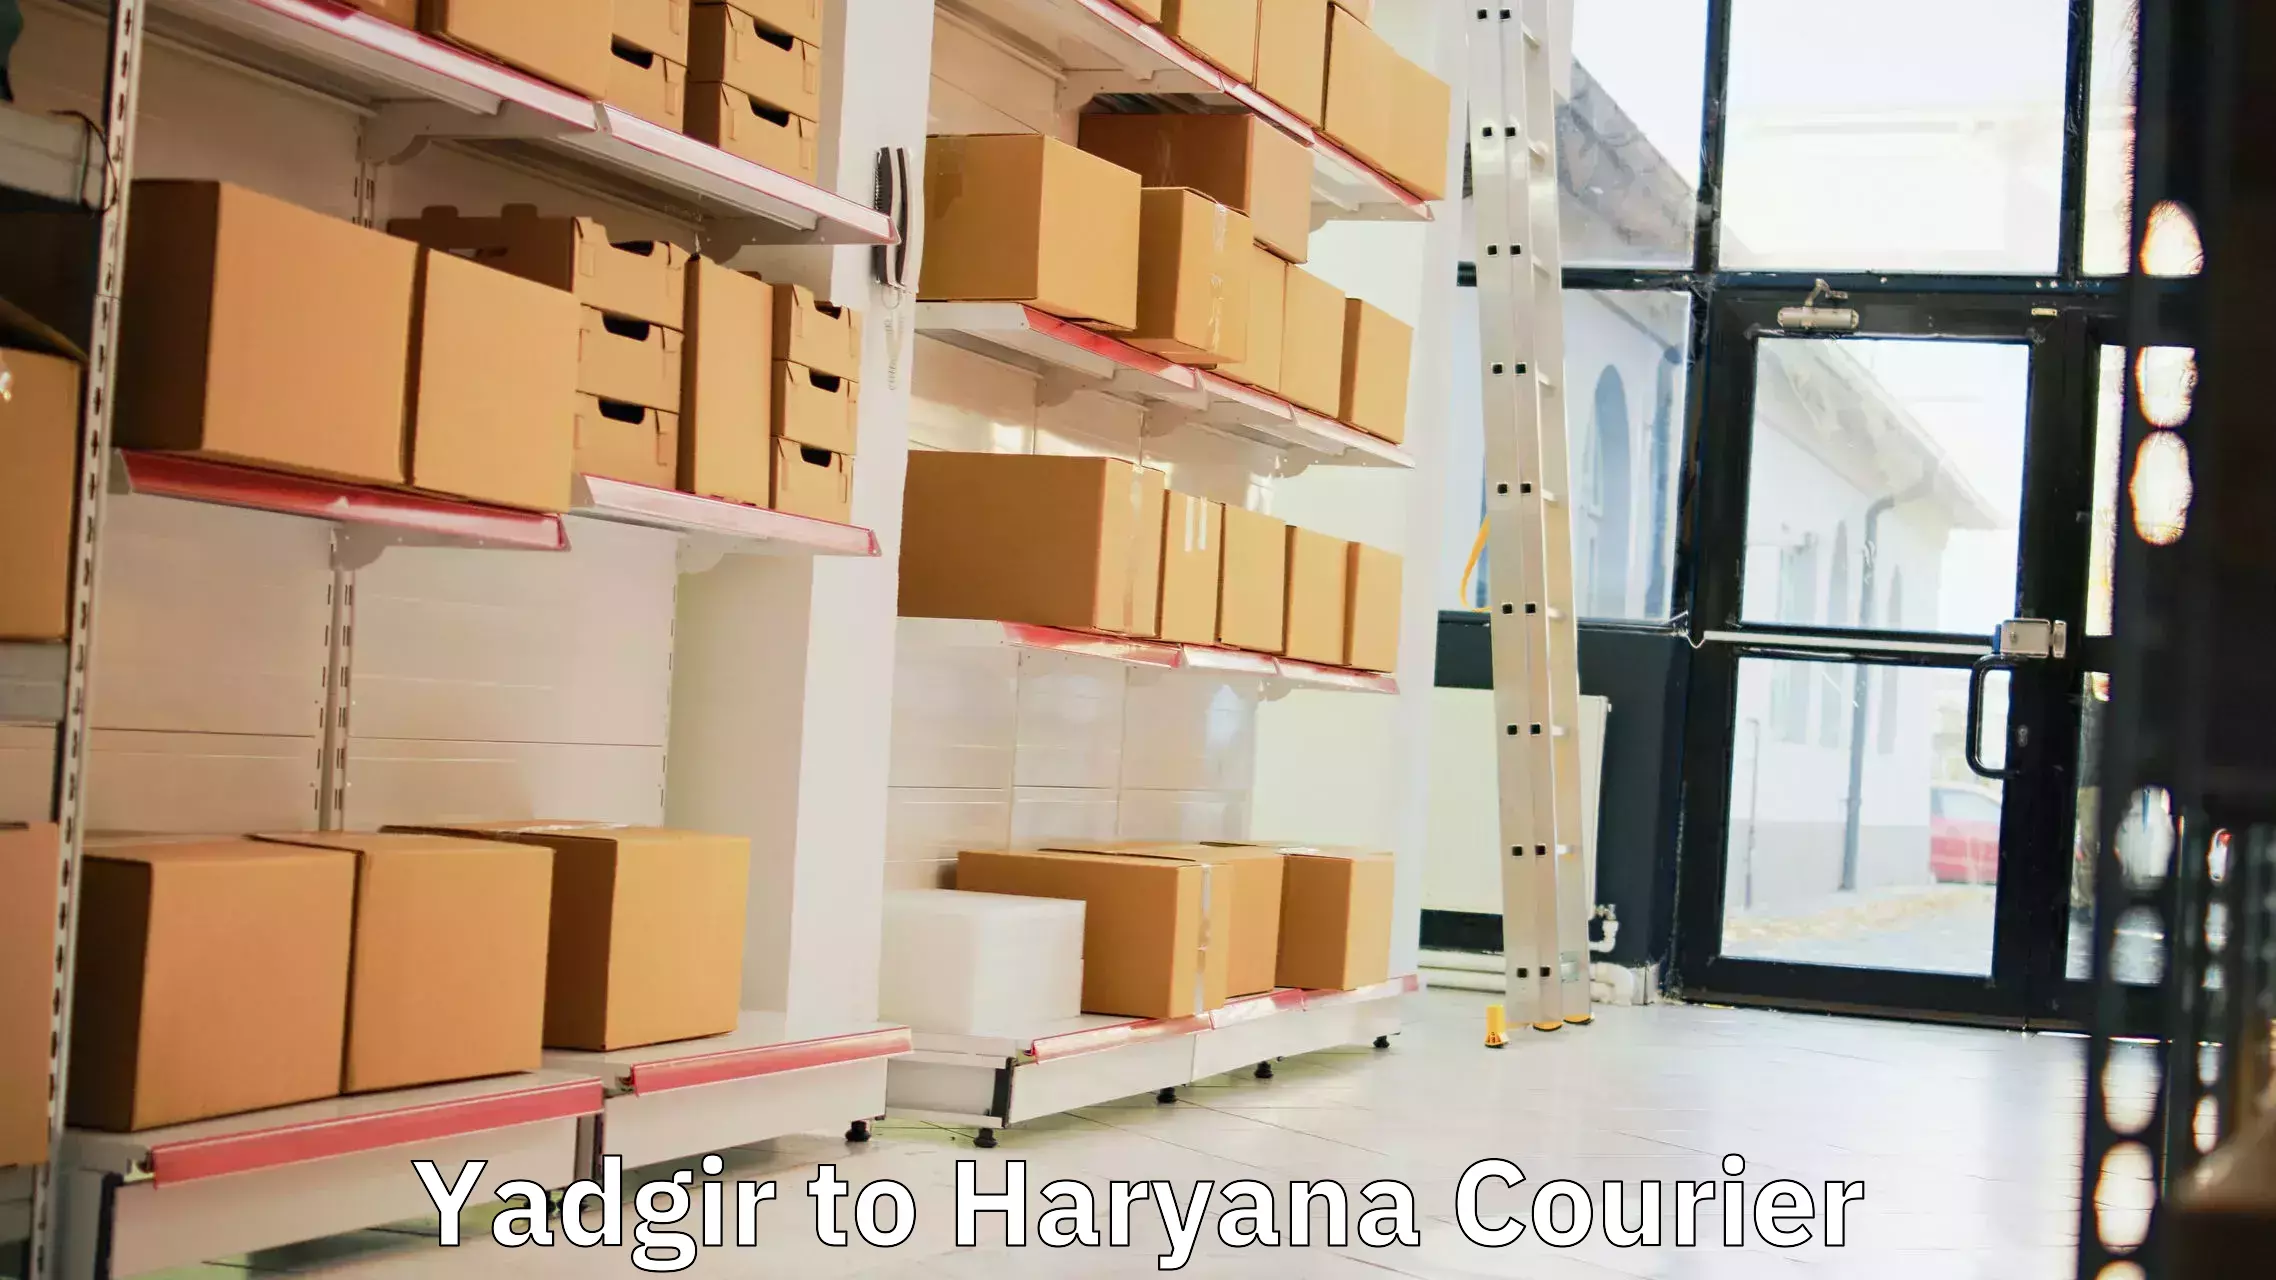 Courier service partnerships Yadgir to Dharuhera